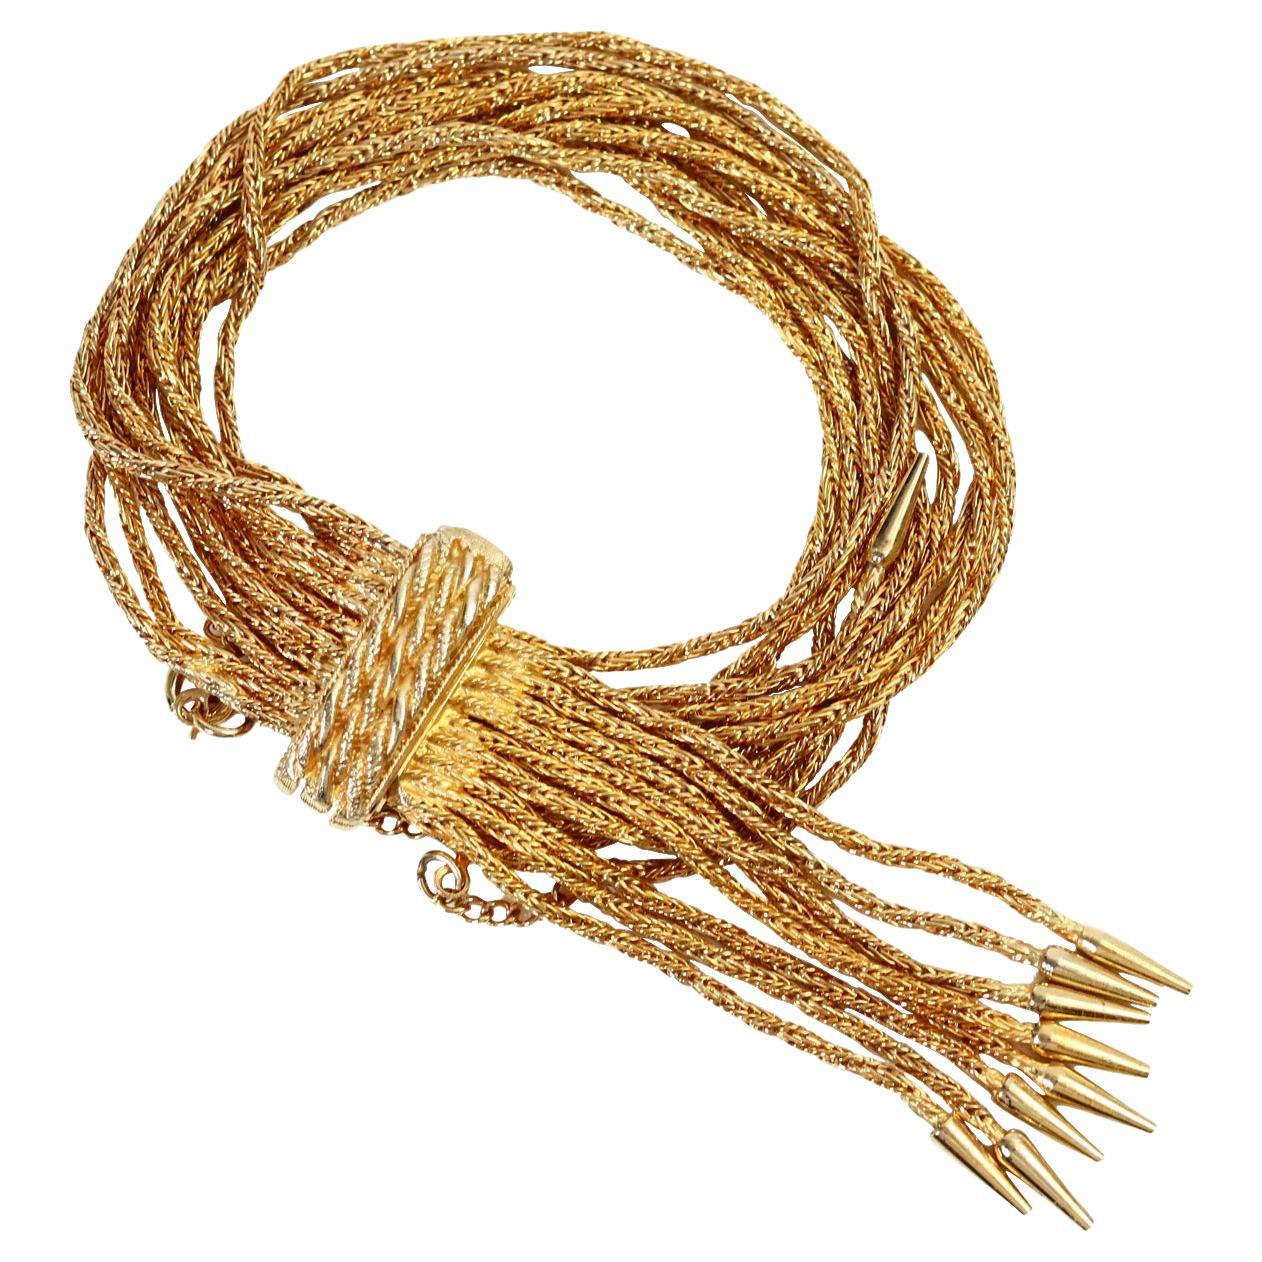 Vintage Vendome Gold 10 Link Bracelet with Dangling Pieces, circa 1960s